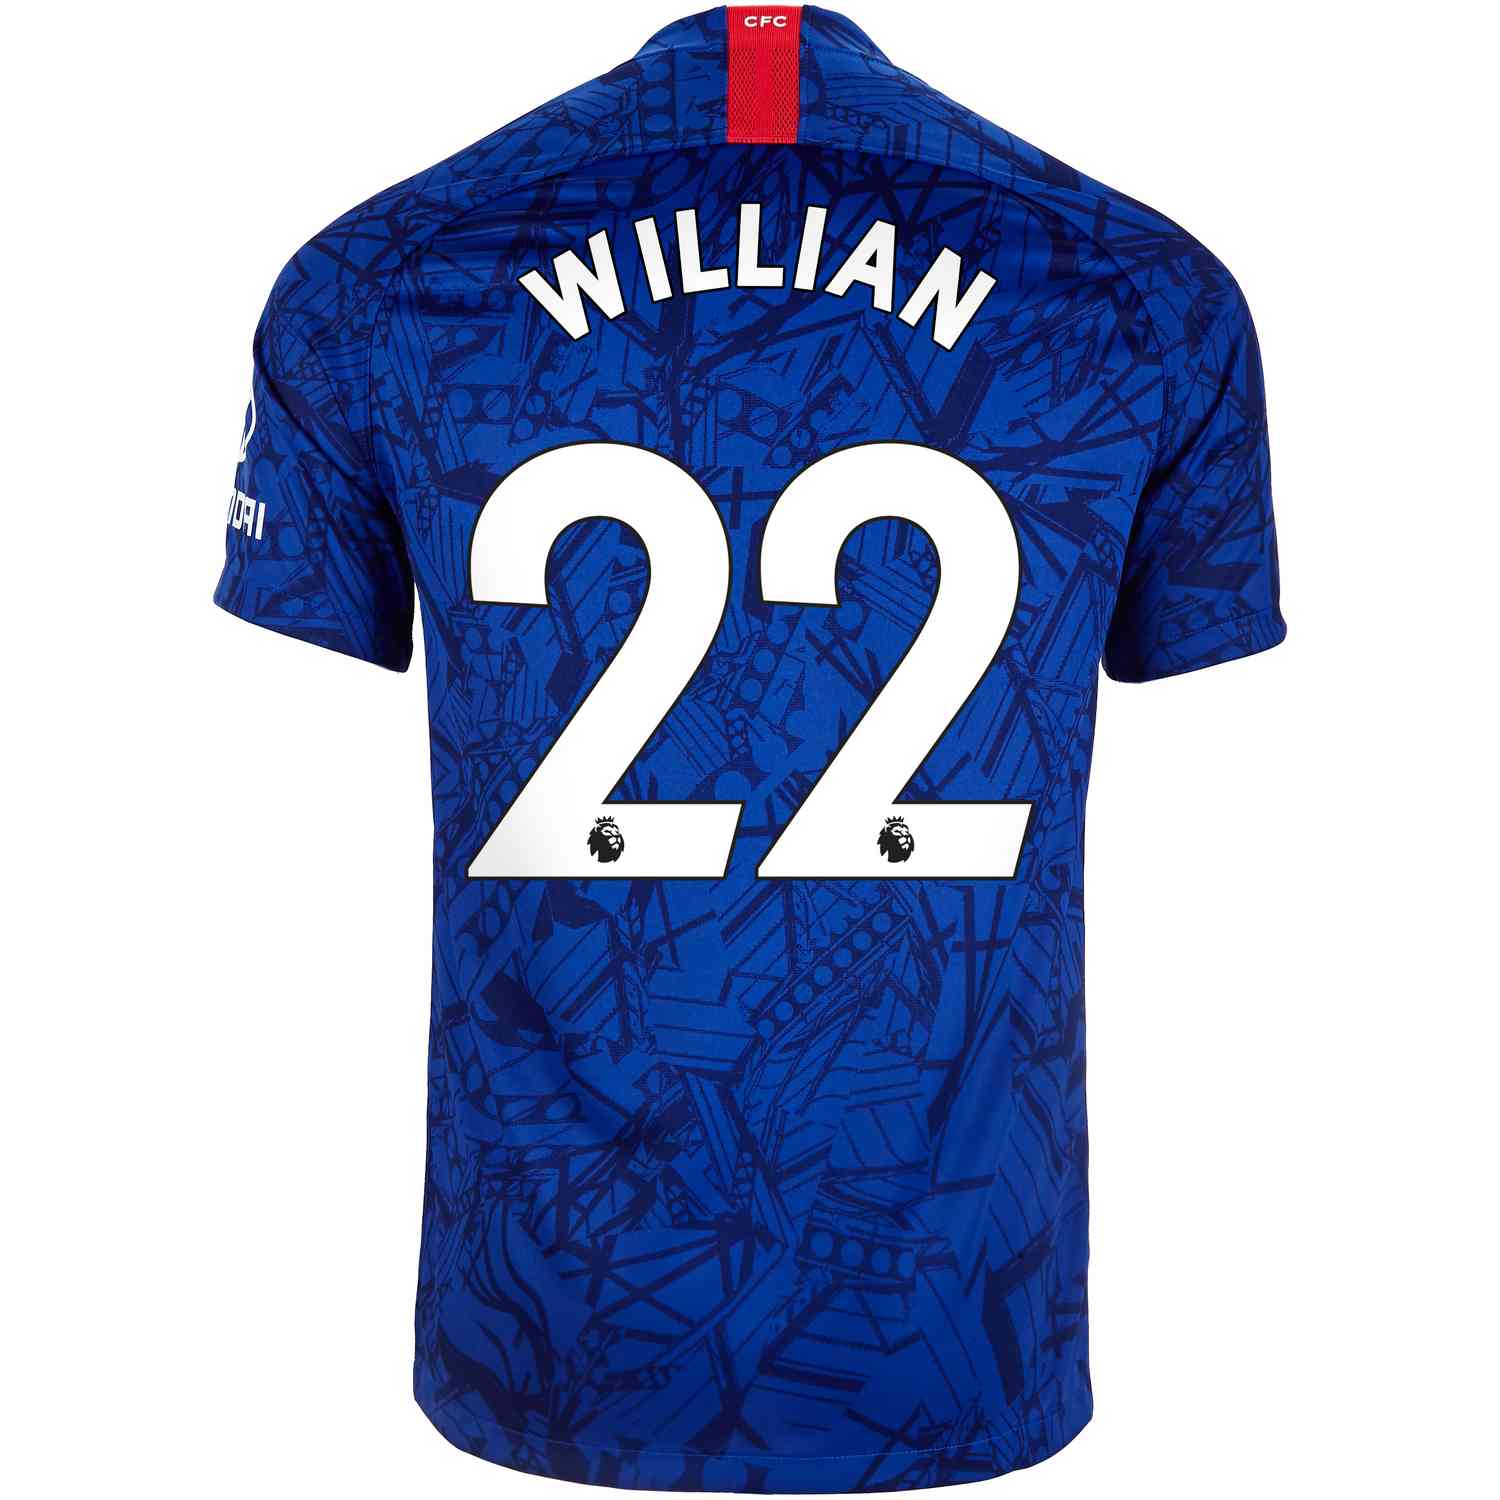 willian jersey